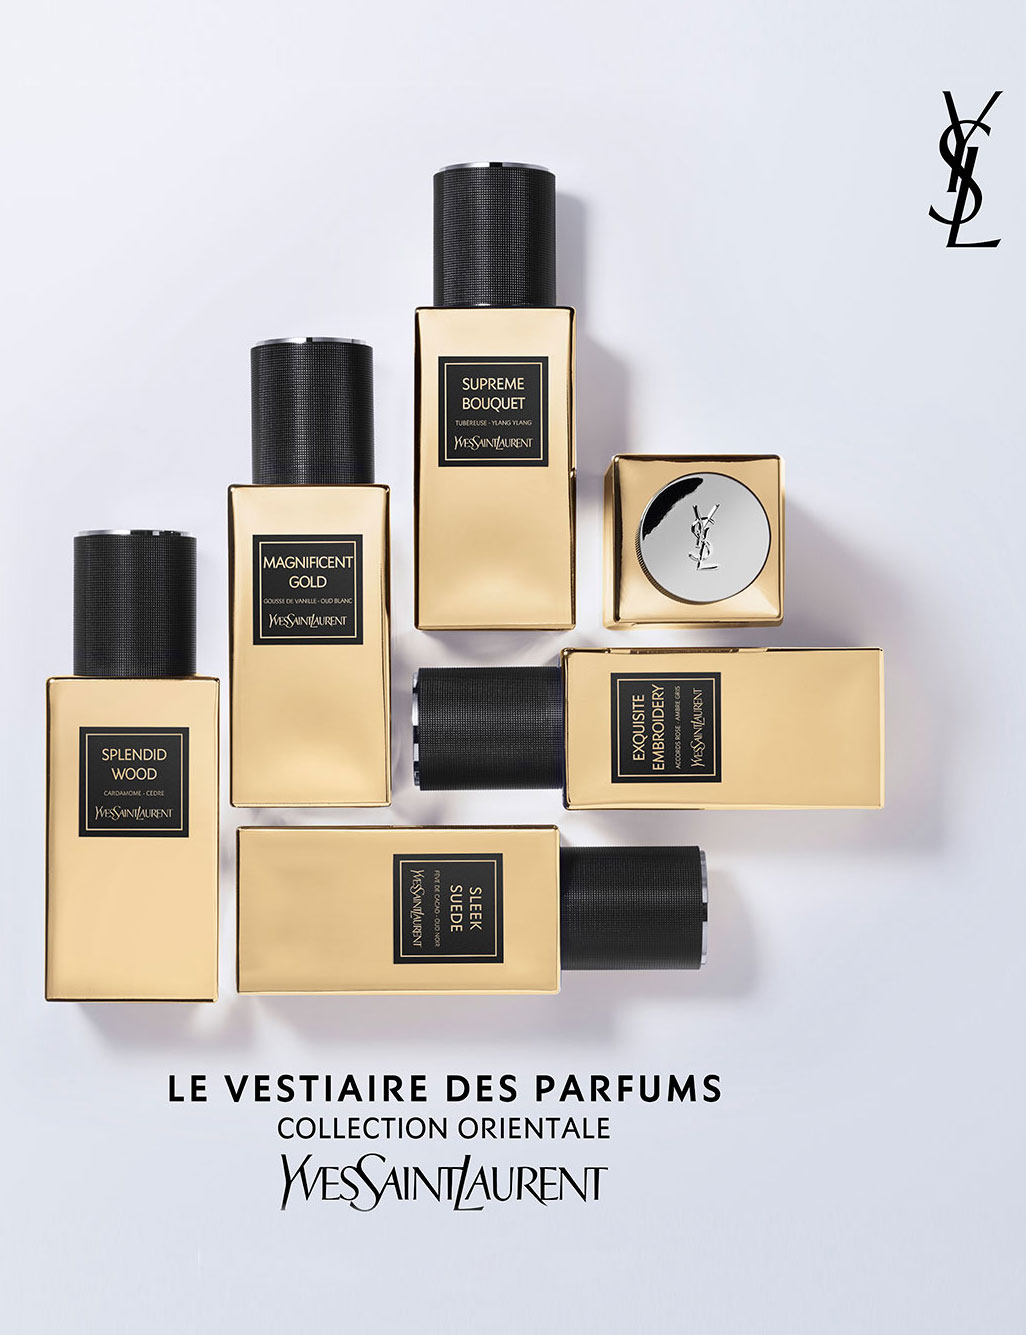 Yves Saint Laurent Oriental Collection